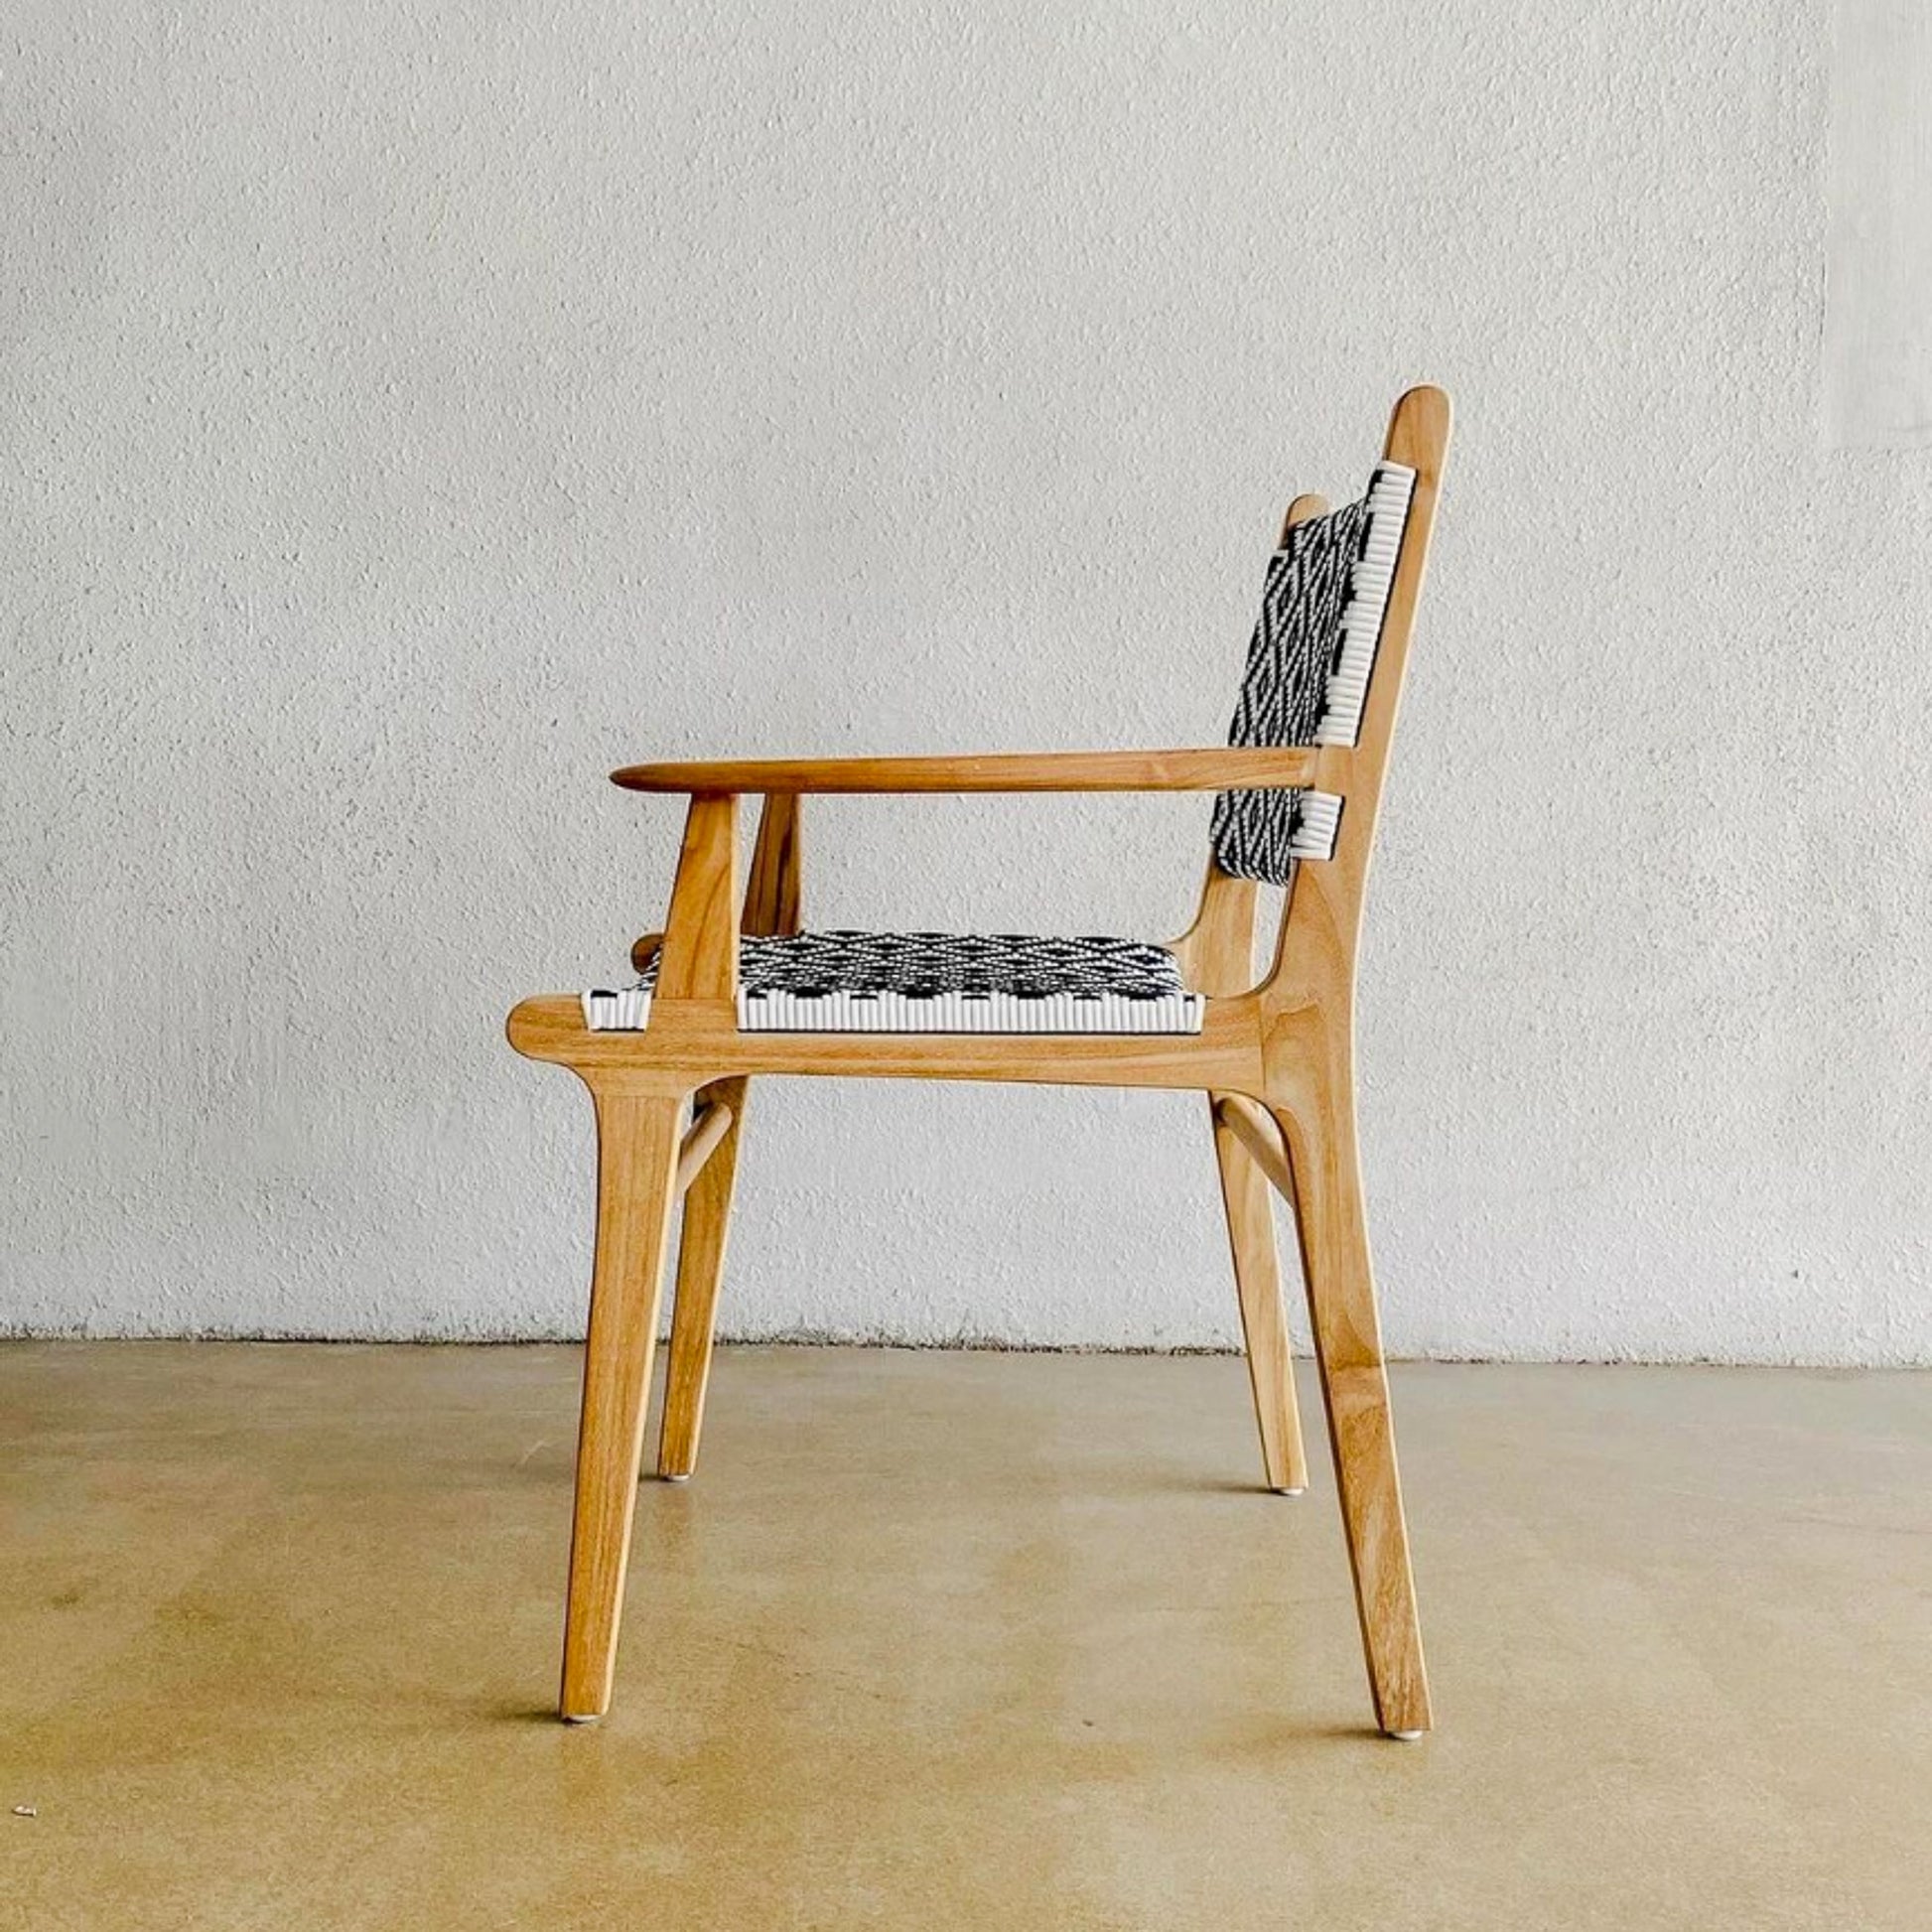 Hand woven Rattan chair